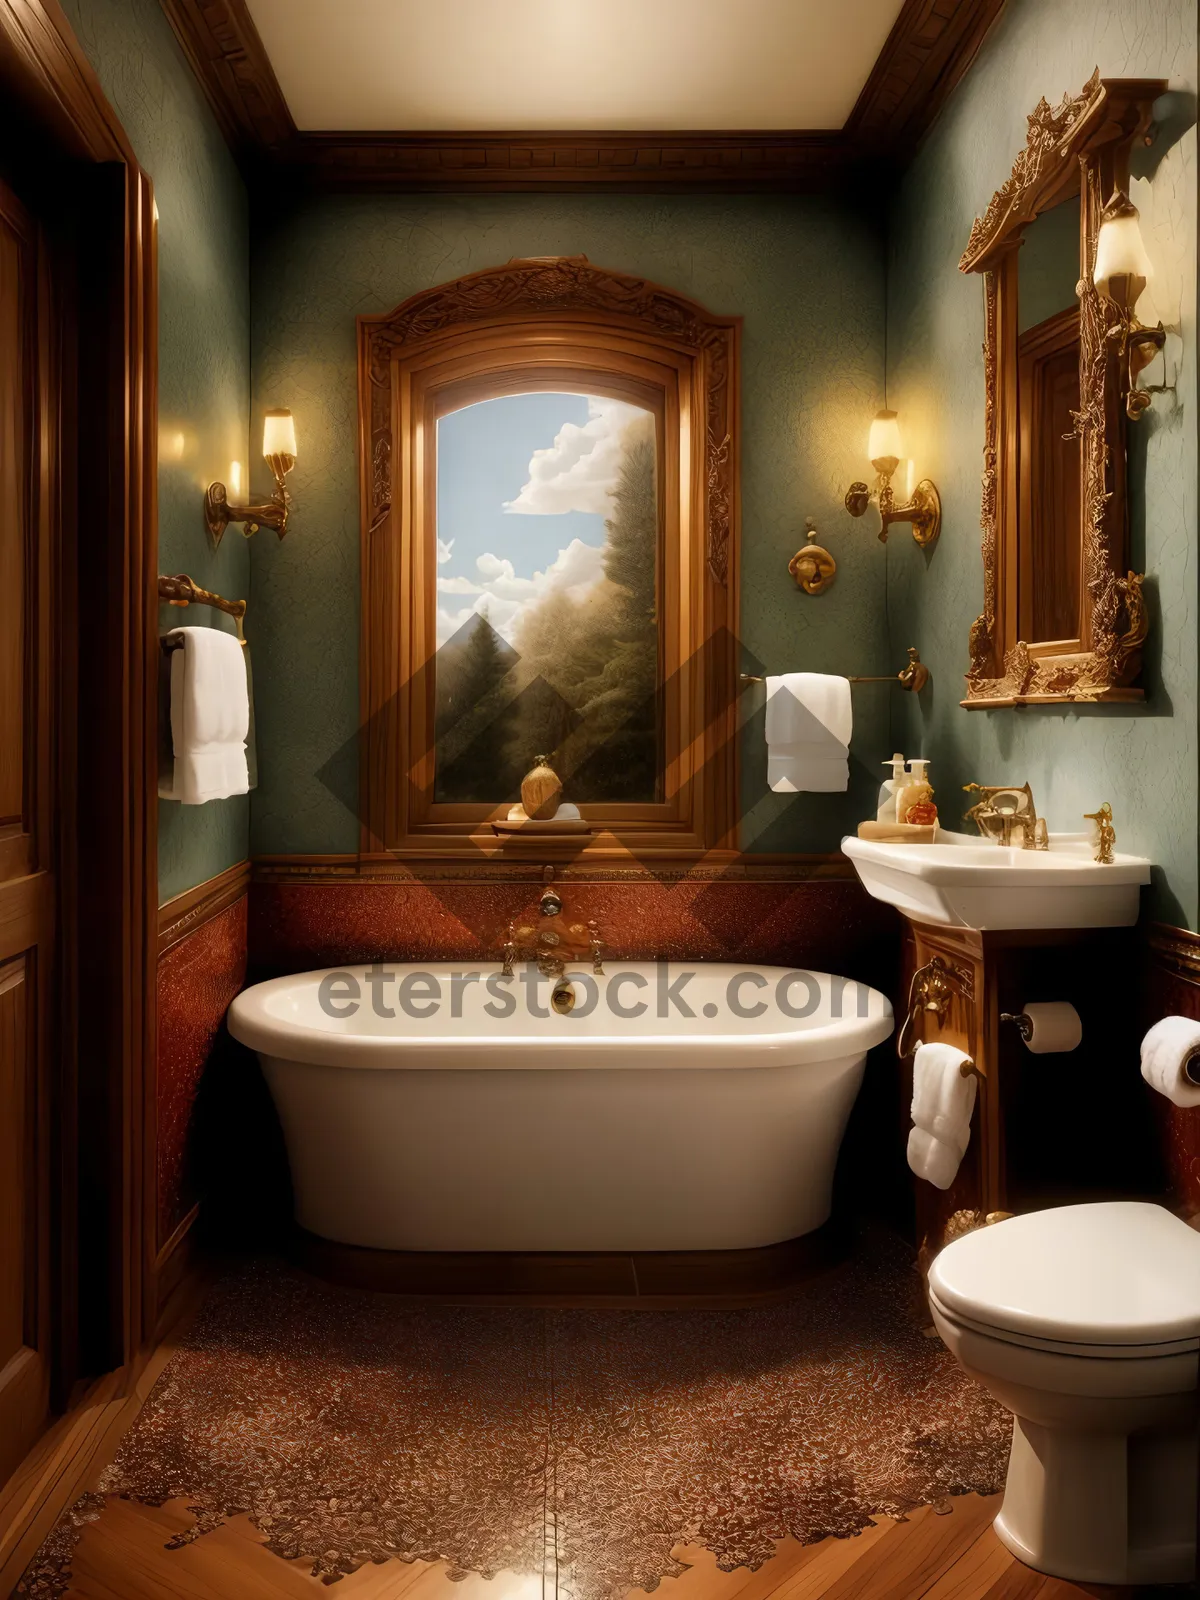 Picture of Modern Luxury Bathroom with Elegant Interior Design